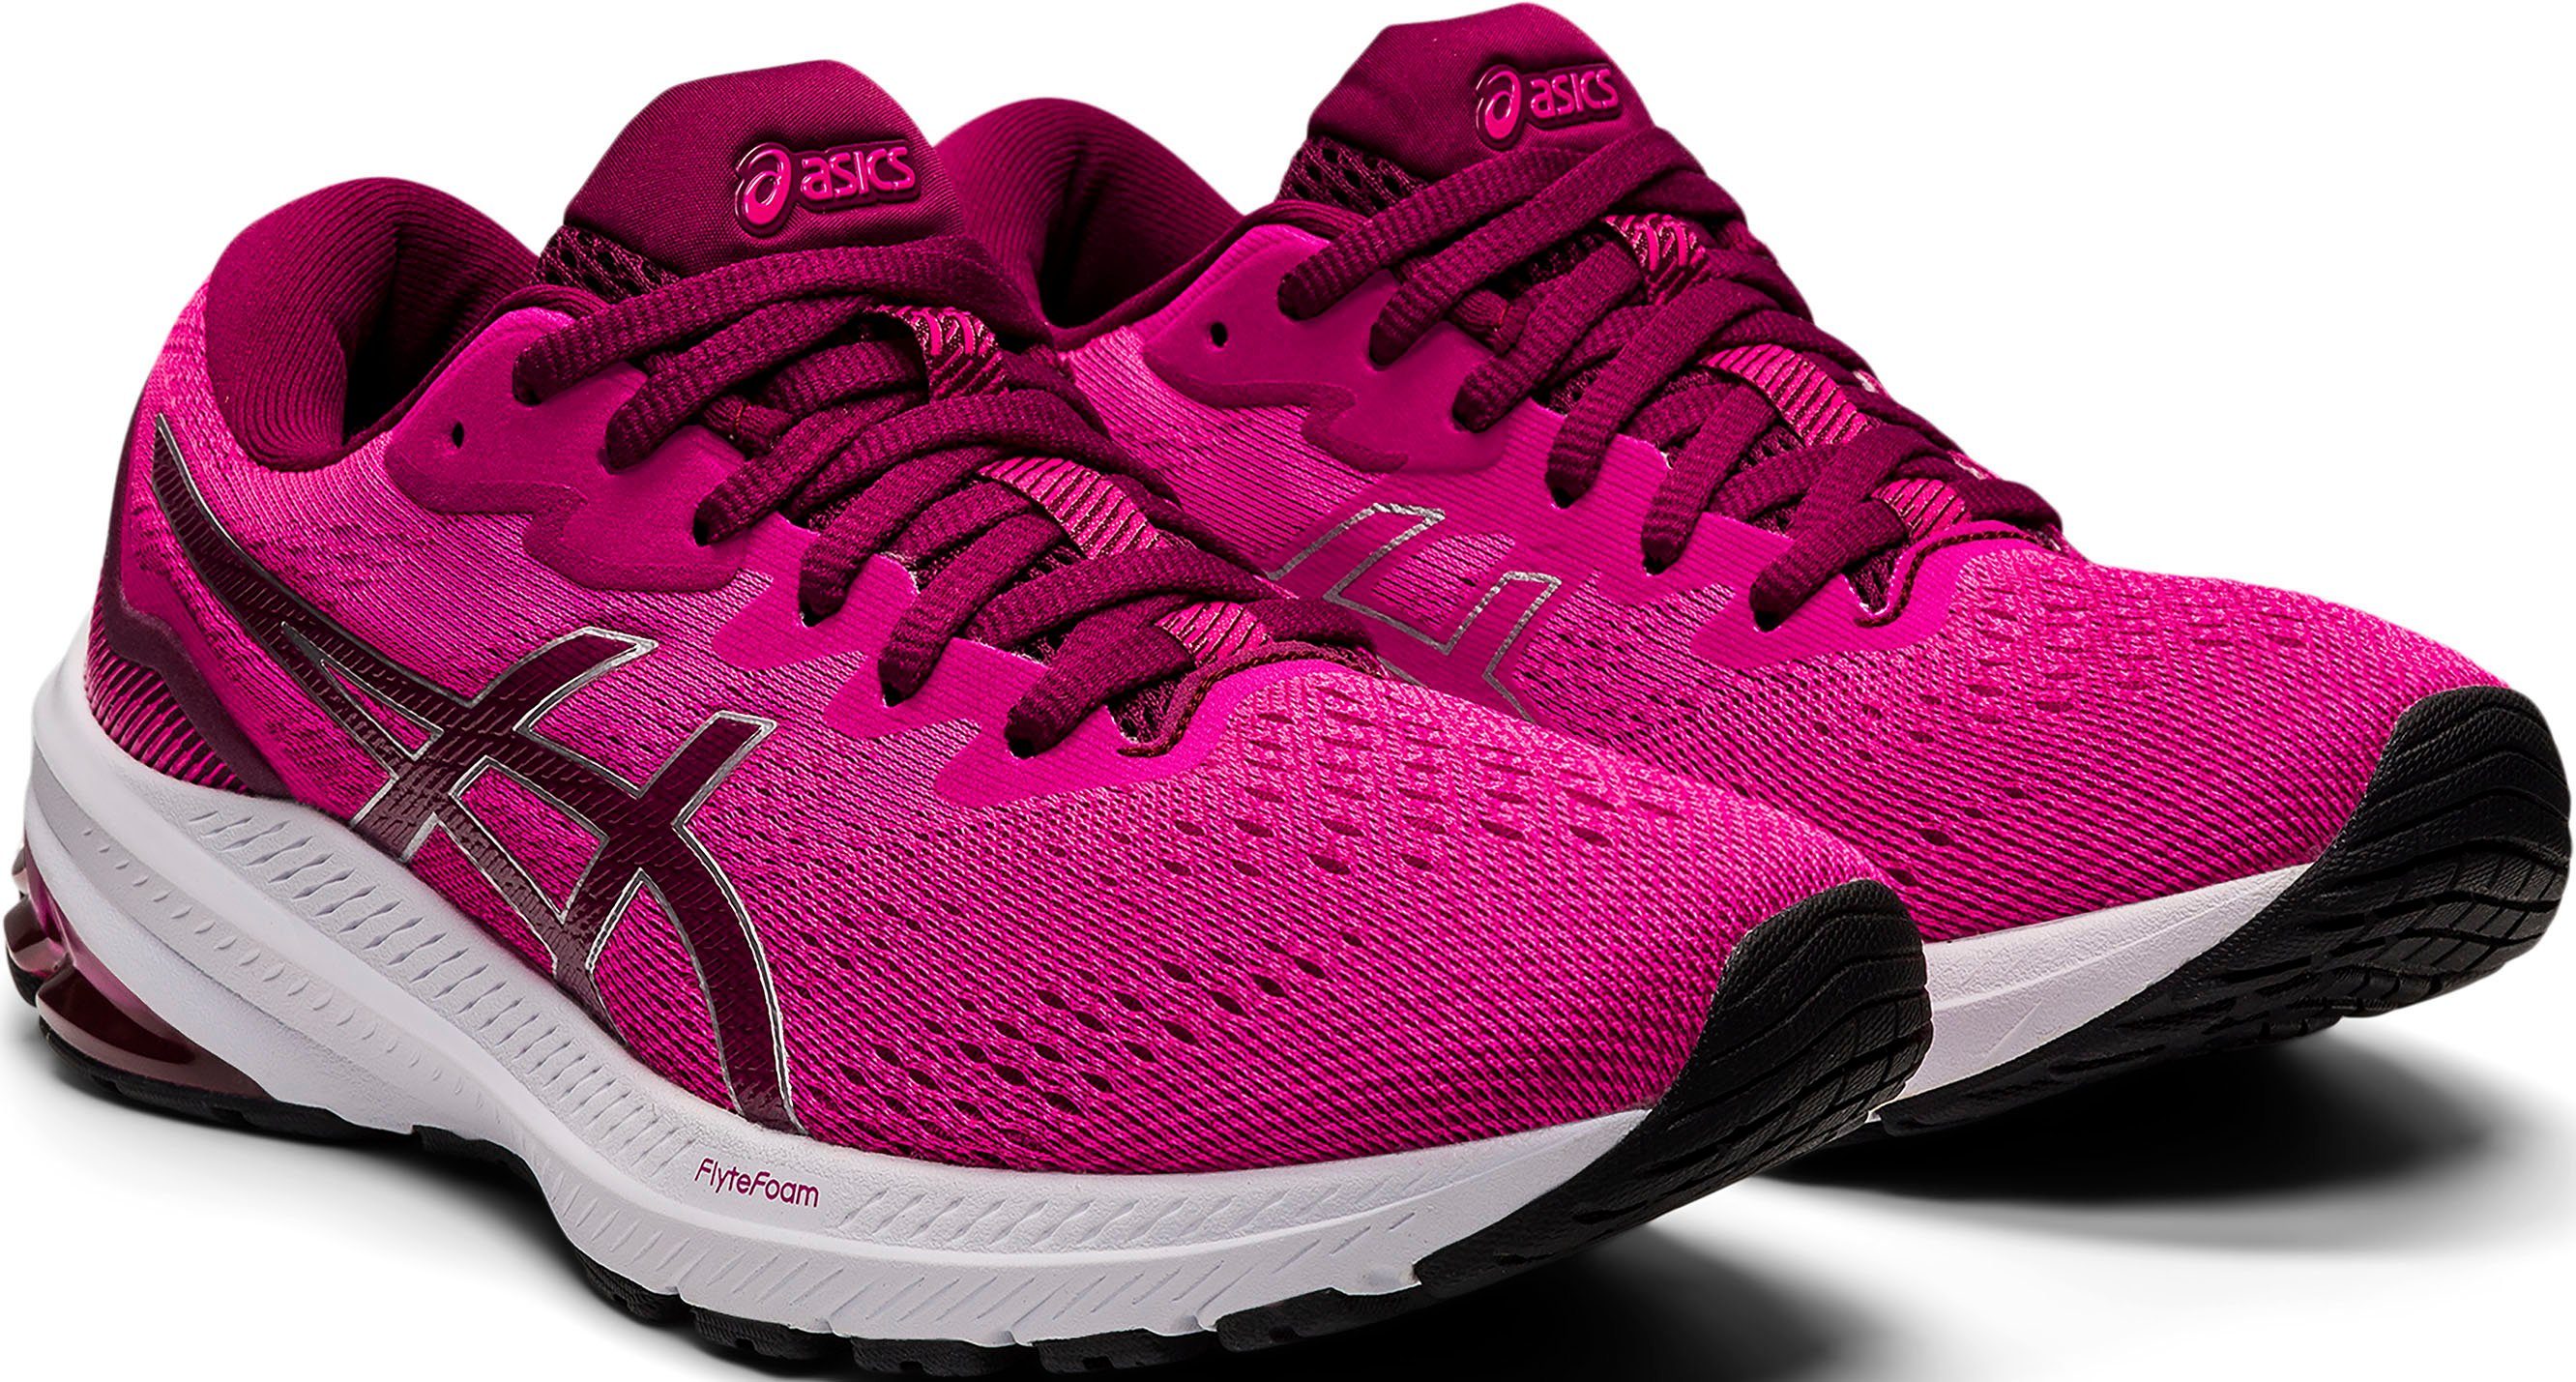 Rosa Laufschuhe online kaufen » Pinke Laufschuhe | OTTO